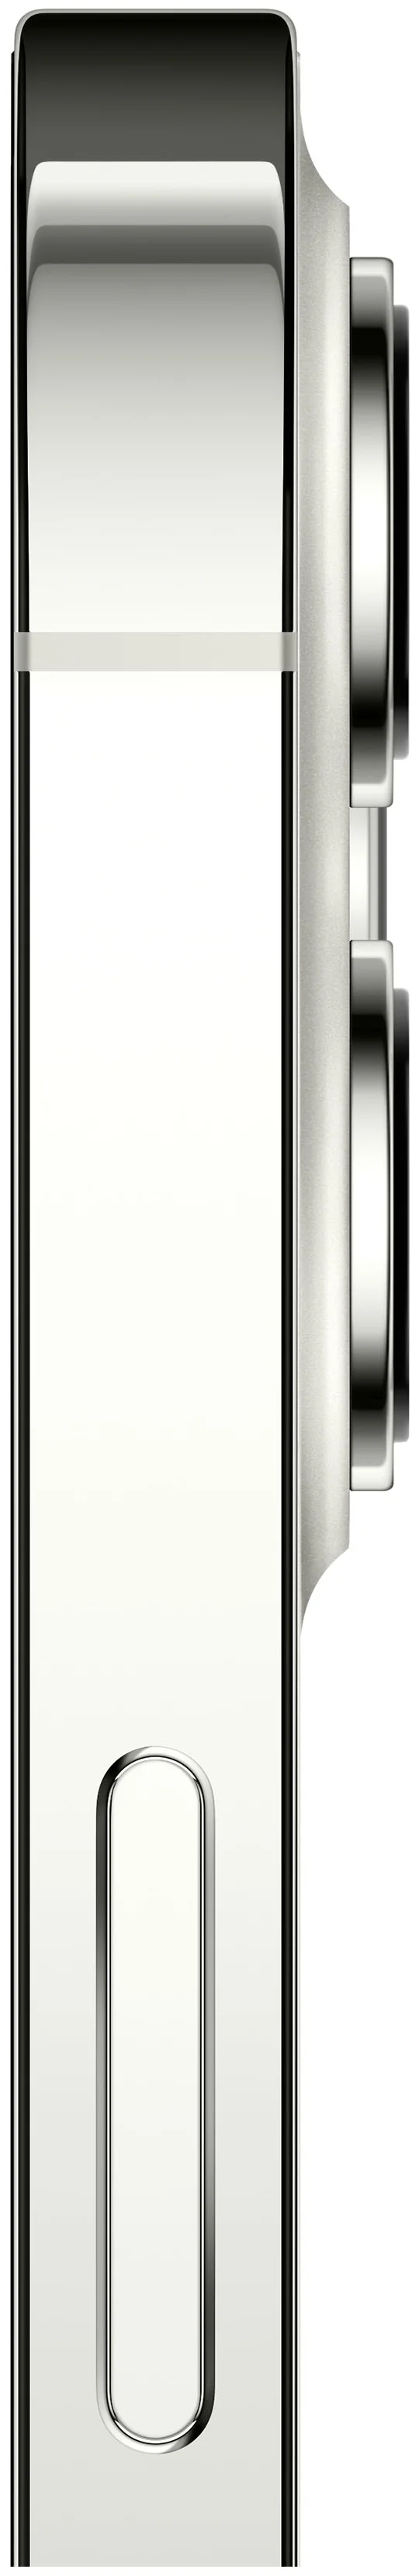 Apple iPhone 12 Pro Max 256GB - интернет: 4G LTE, 5G